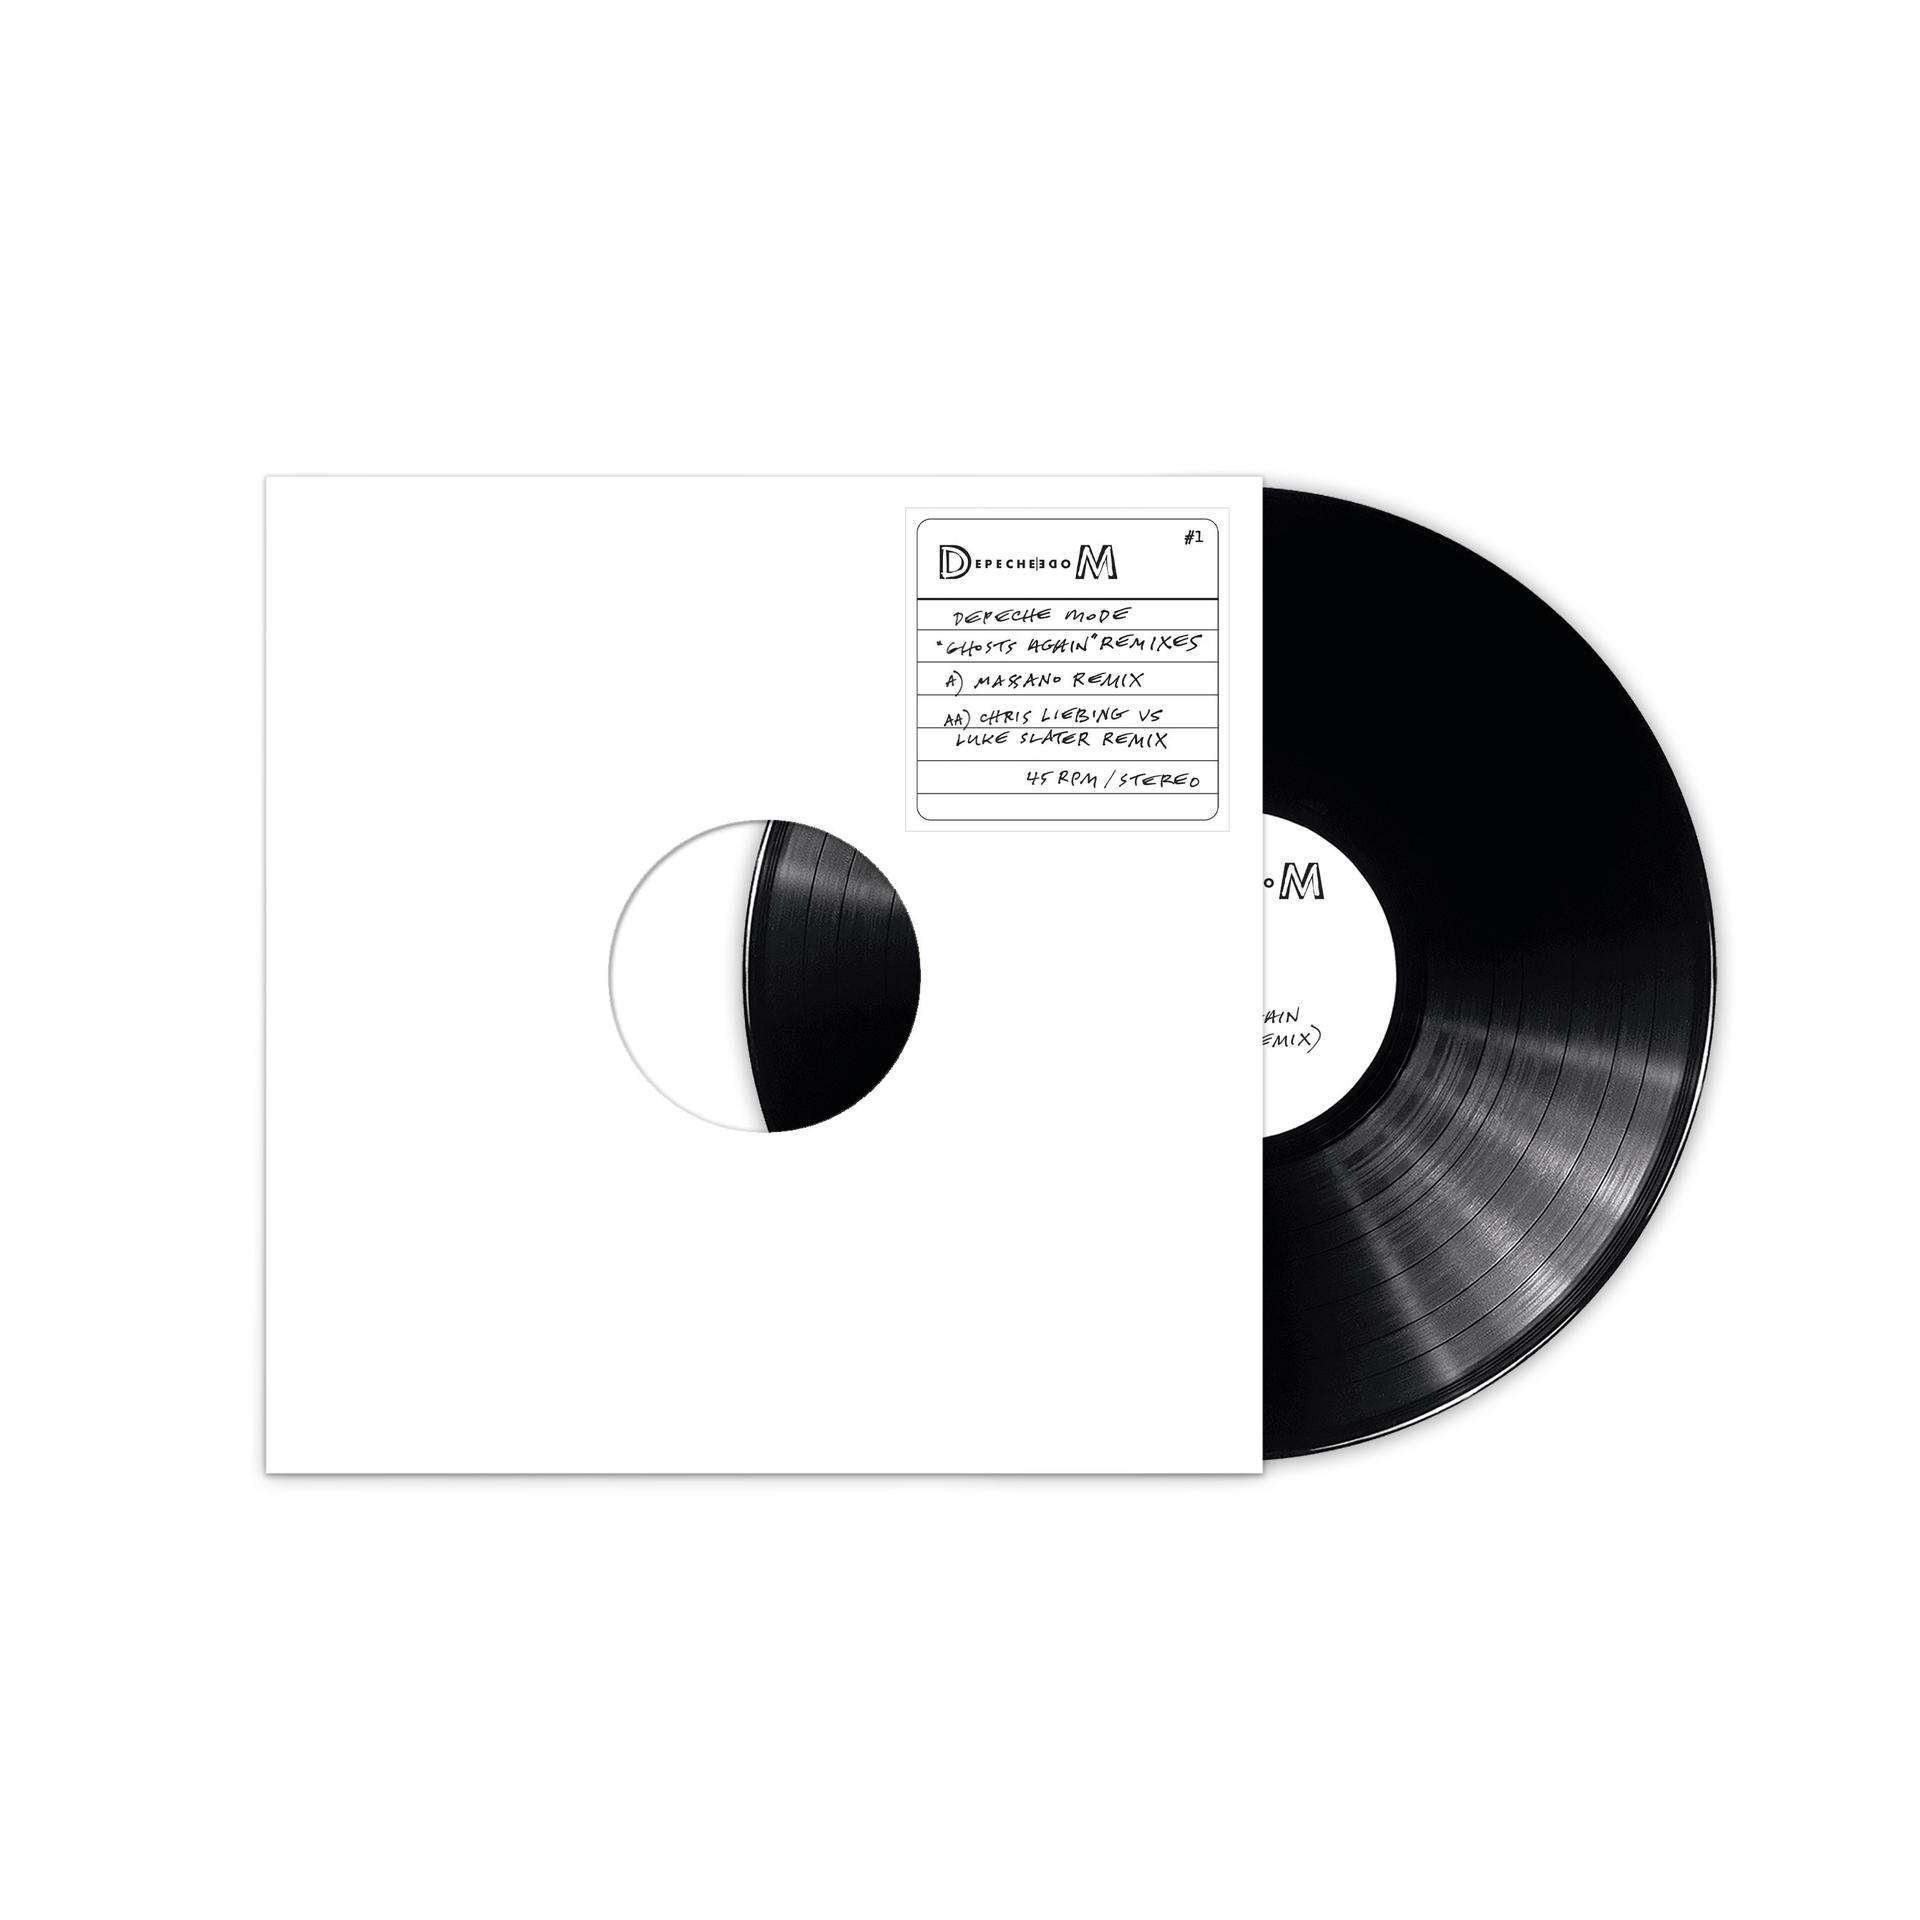 Remixes (Vinyl) Mode Again - Depeche Ghosts -